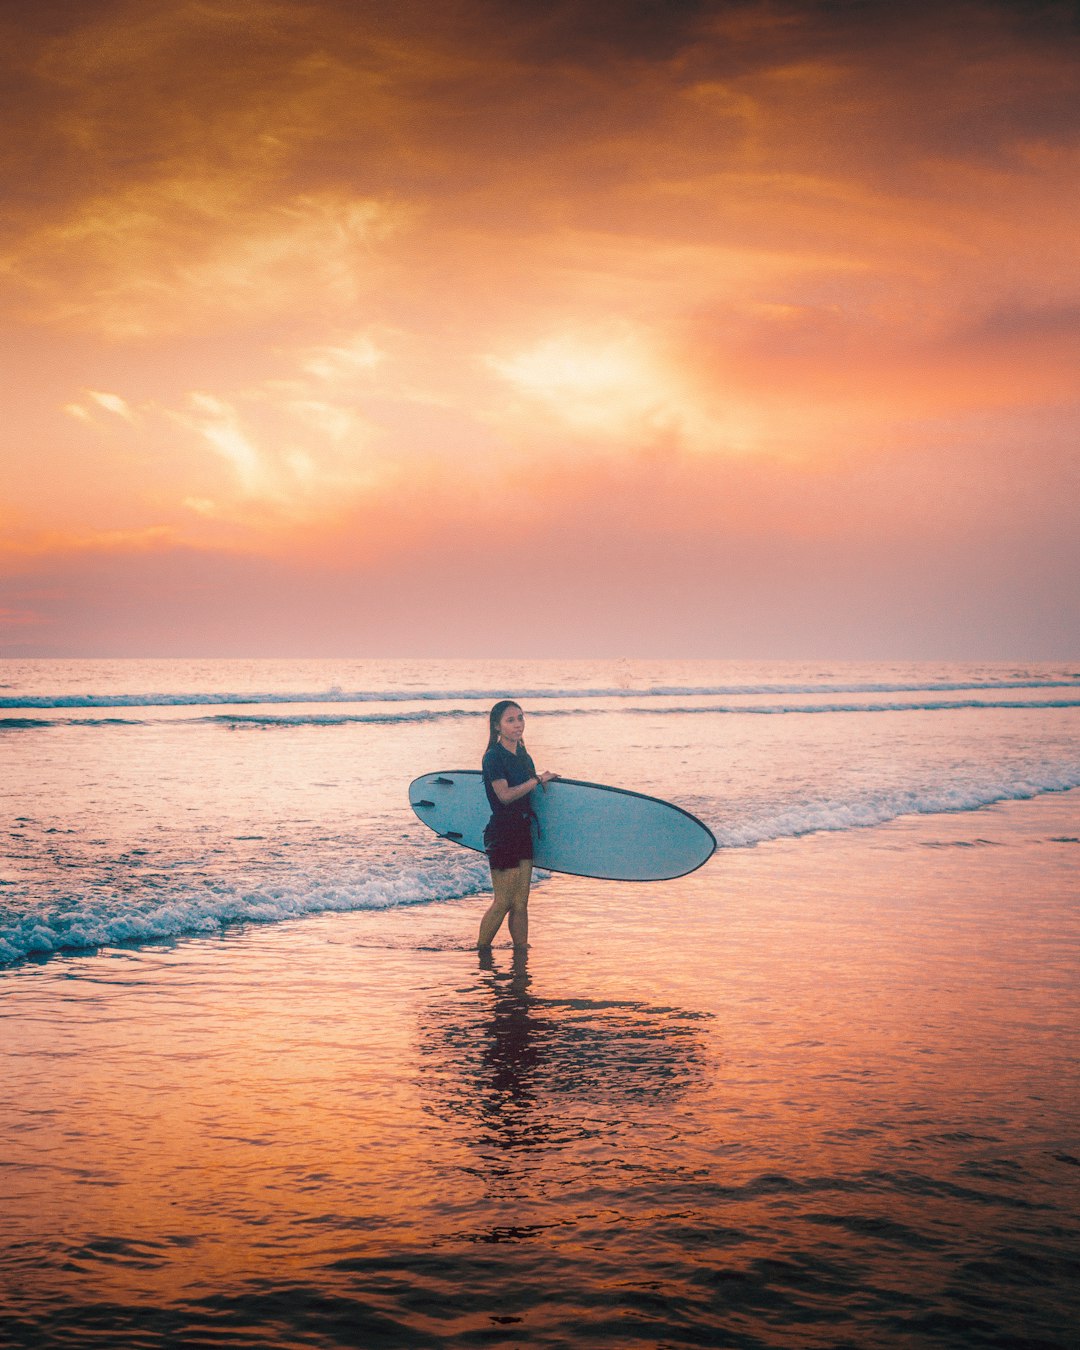 man in white shirt holding white surfboard walking on beach during sunset